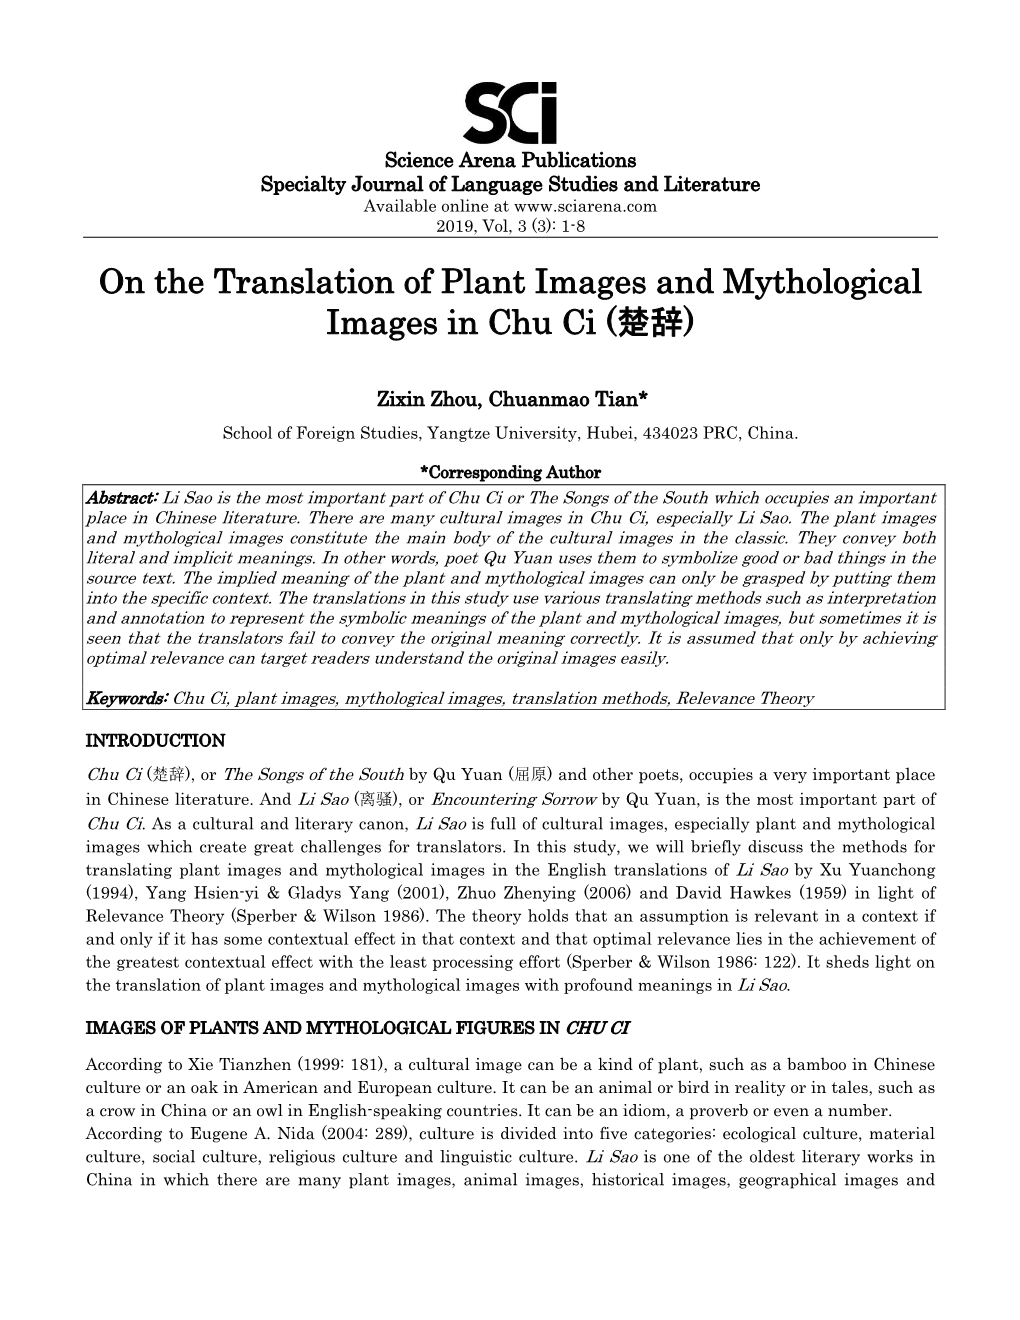 On the Translation of Plant Images and Mythological Images in Chu Ci (楚辞)